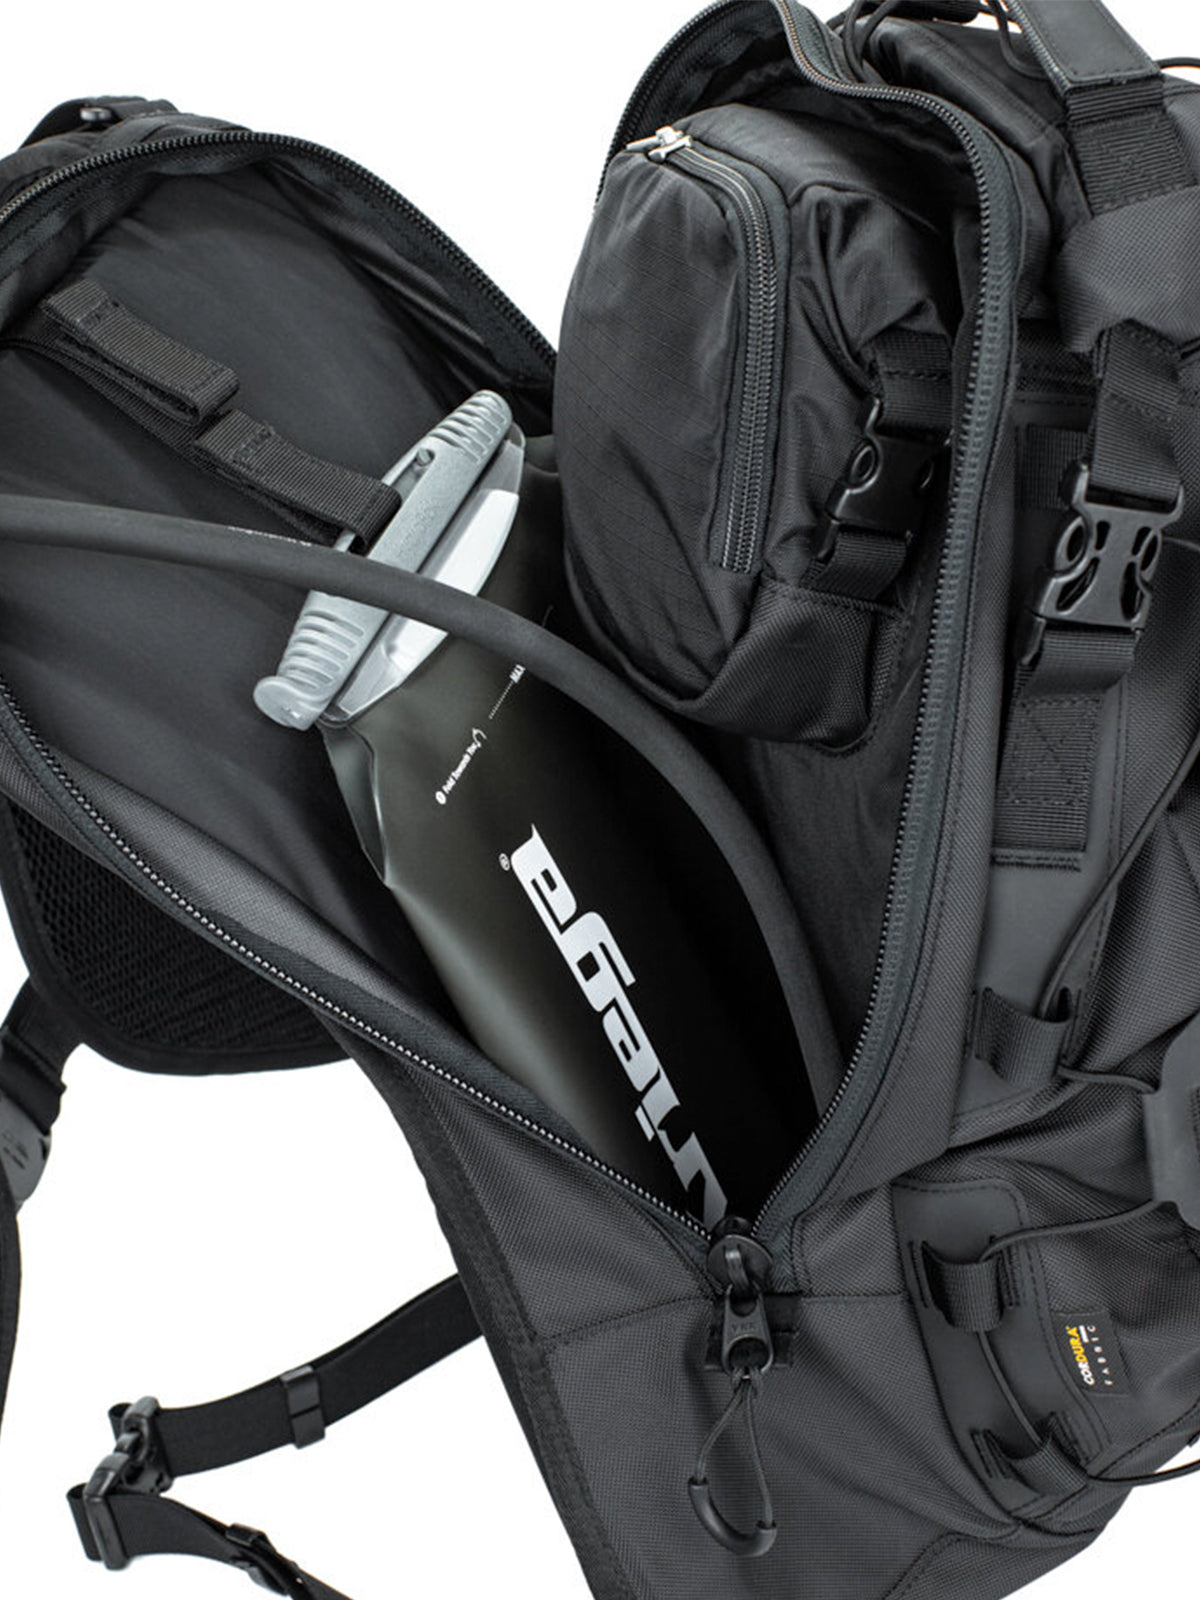 Kriega Hydrapak Shape-Shift™ Reservoir 3.75 Litre in backpack